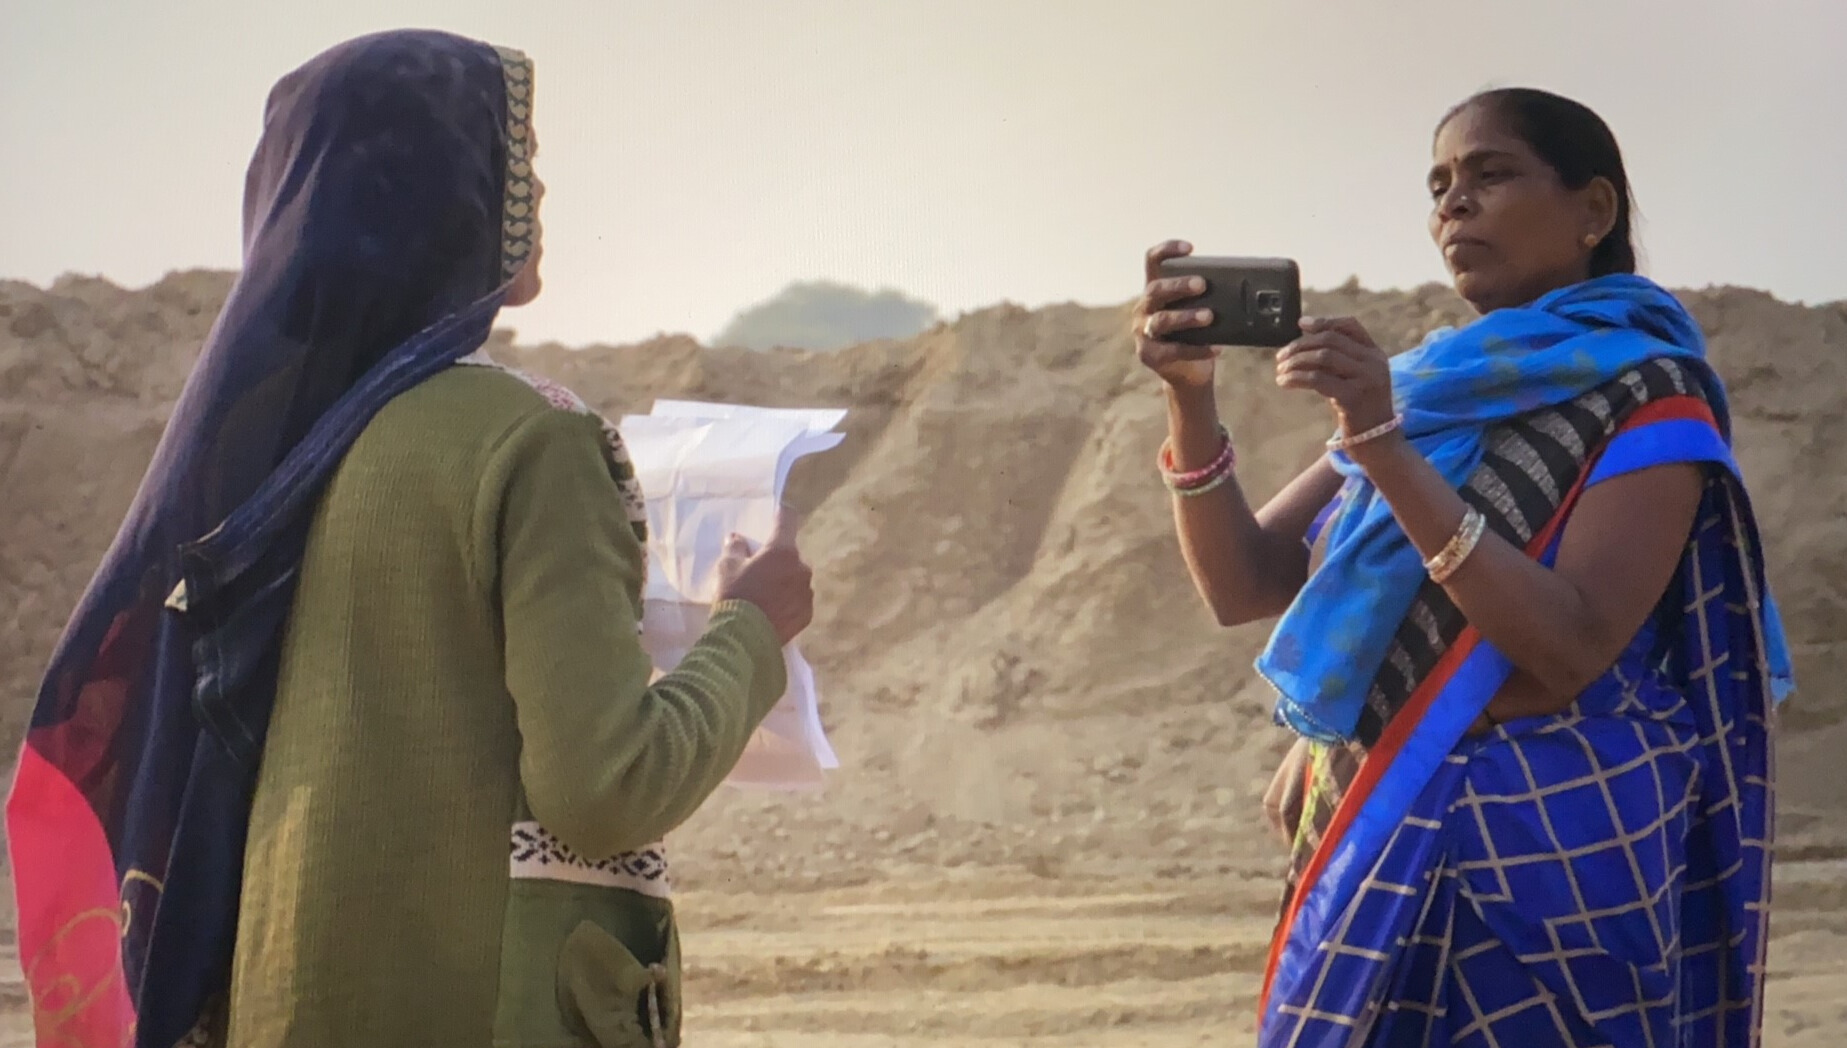 Shiv Devi, Khabar Lahariya’s senior reporter, in Amara village to report on an illicit sand mining incident, November 2020.